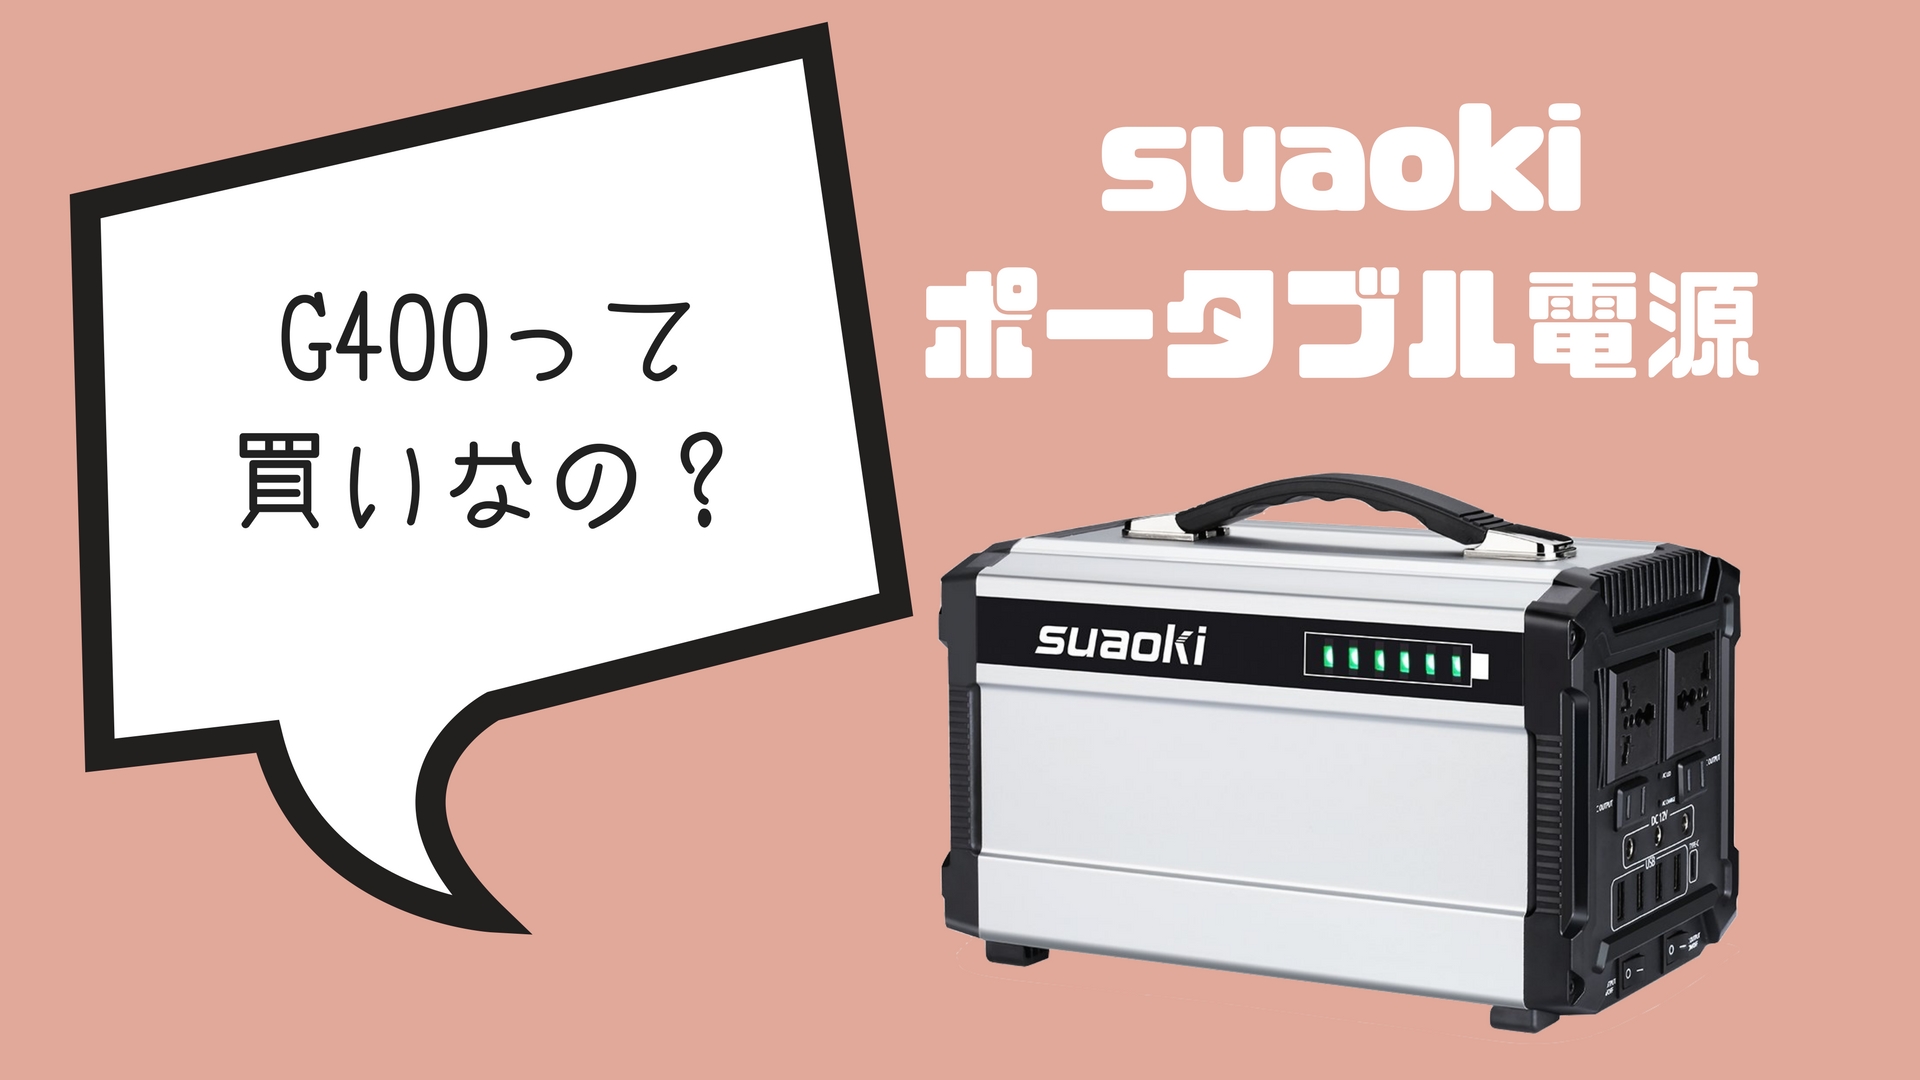 suaokiポータブル電源G400は”買い”なのか？比較検証してみた！